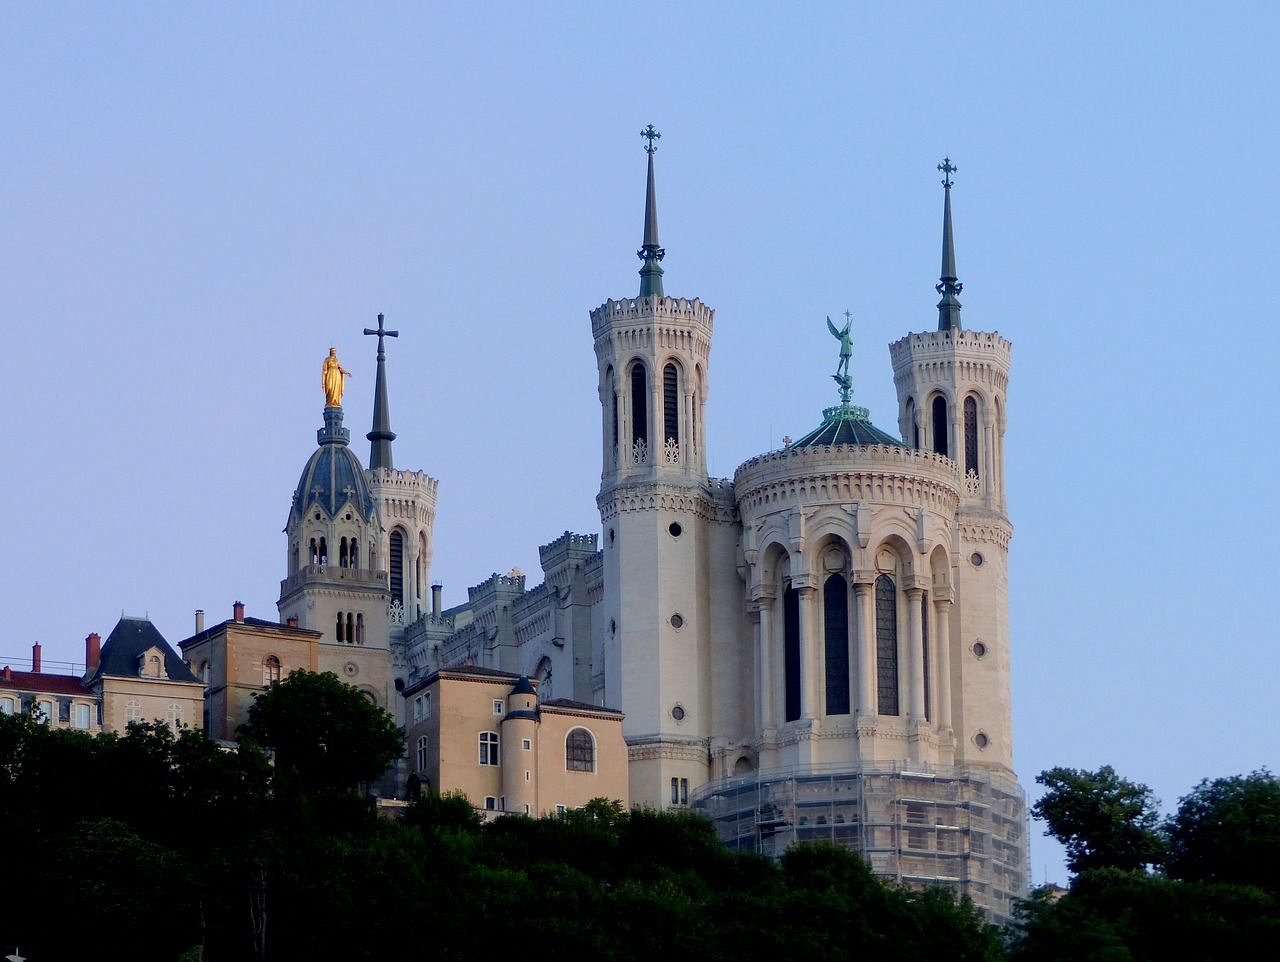 Ilustrasi Gereja Notre Dame Lyon Prancis yang ramai diberitakan setelah terjadi penyerangan terhadap umat yang menyebabkan 3 orang meninggal